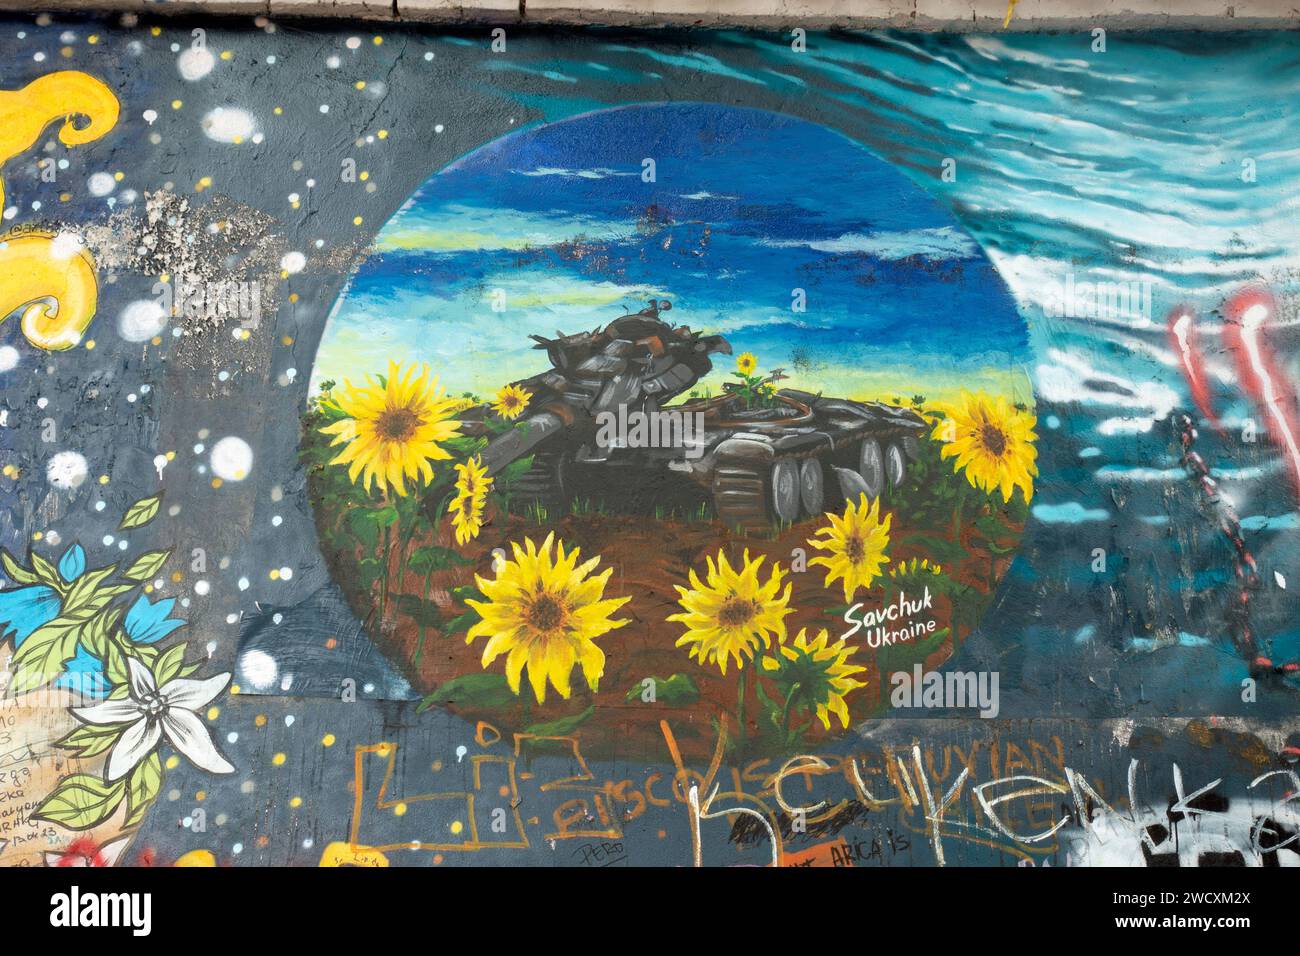 Mural showing support for Ukraine on the Lennon Wall, Malá Strana, Prague, Czechia. Stock Photo